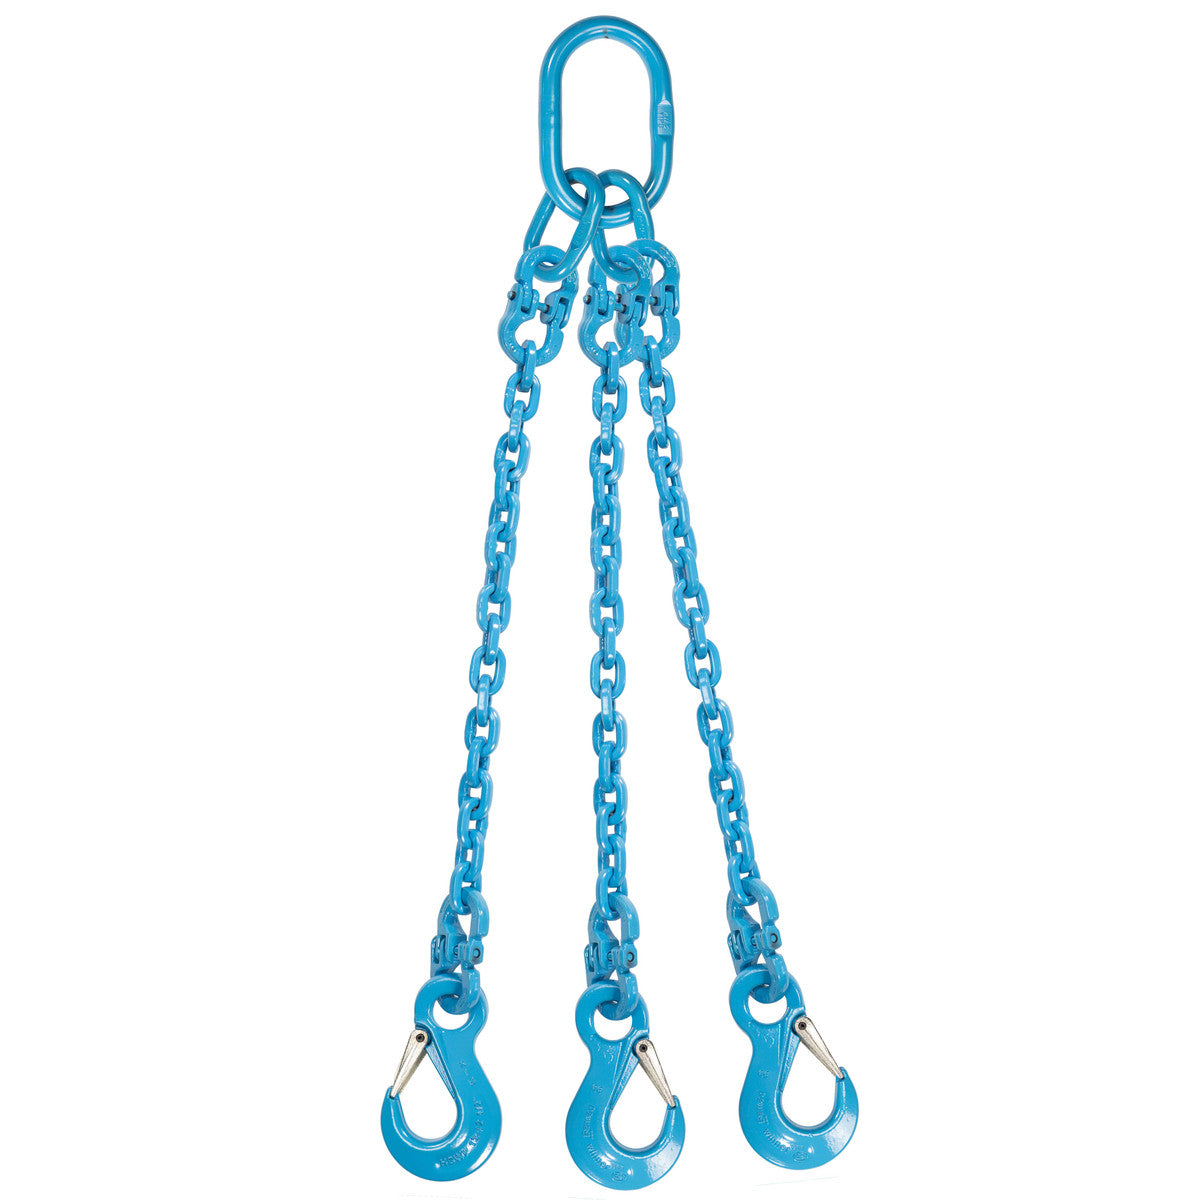 1/2" x 3' - Pewag 3 Leg Chain Sling w/ Sling Hooks - Grade 120